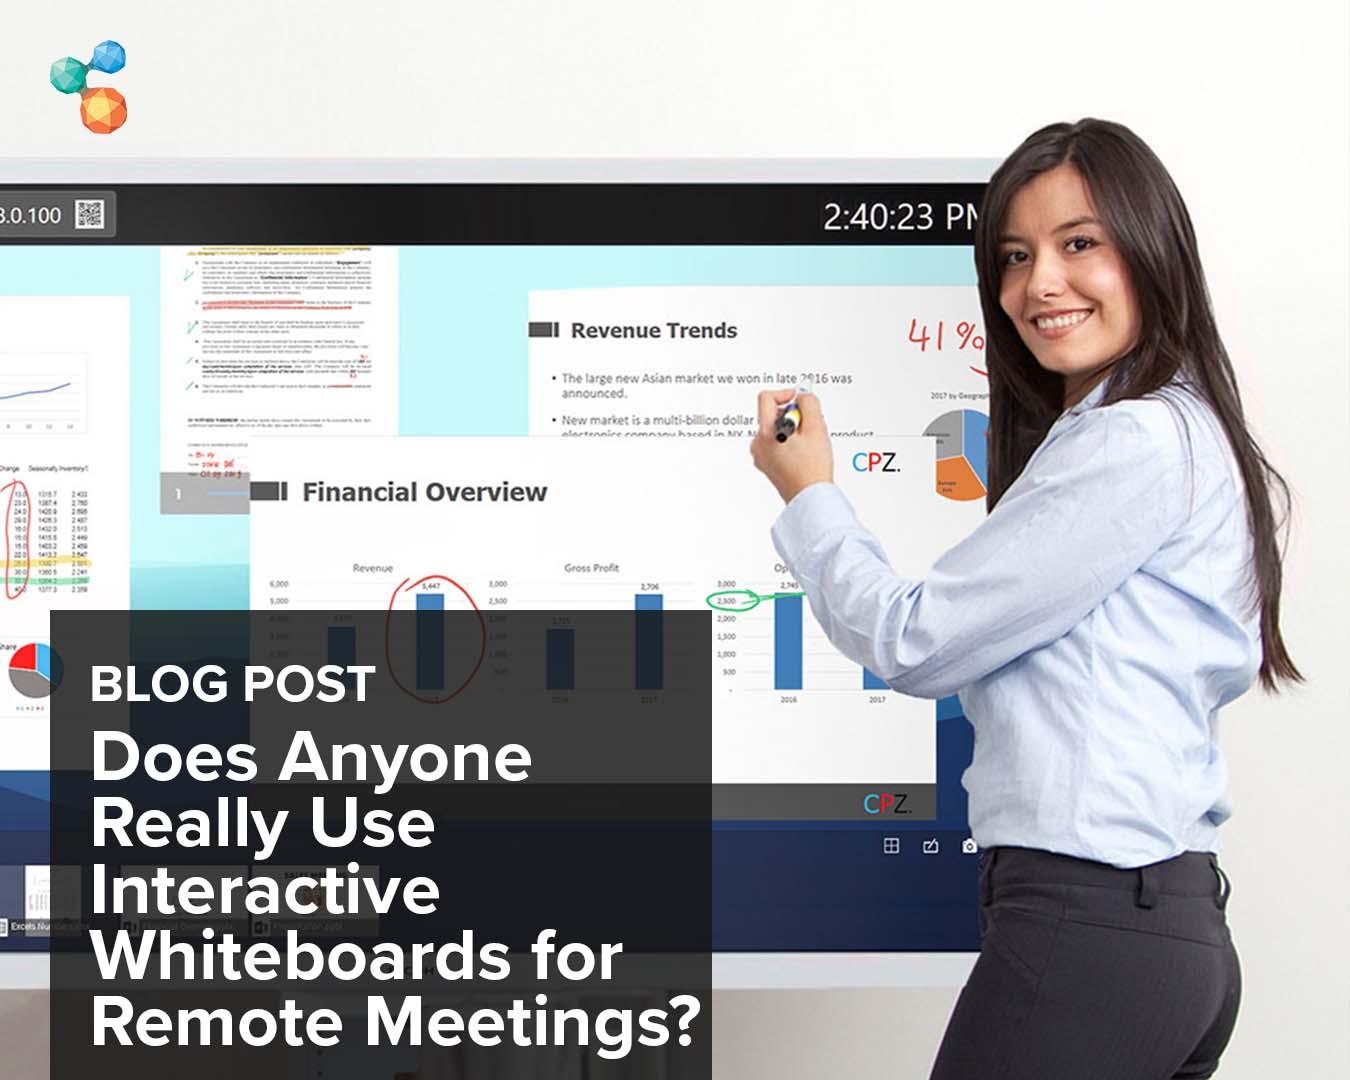 Whiteboard.jpg